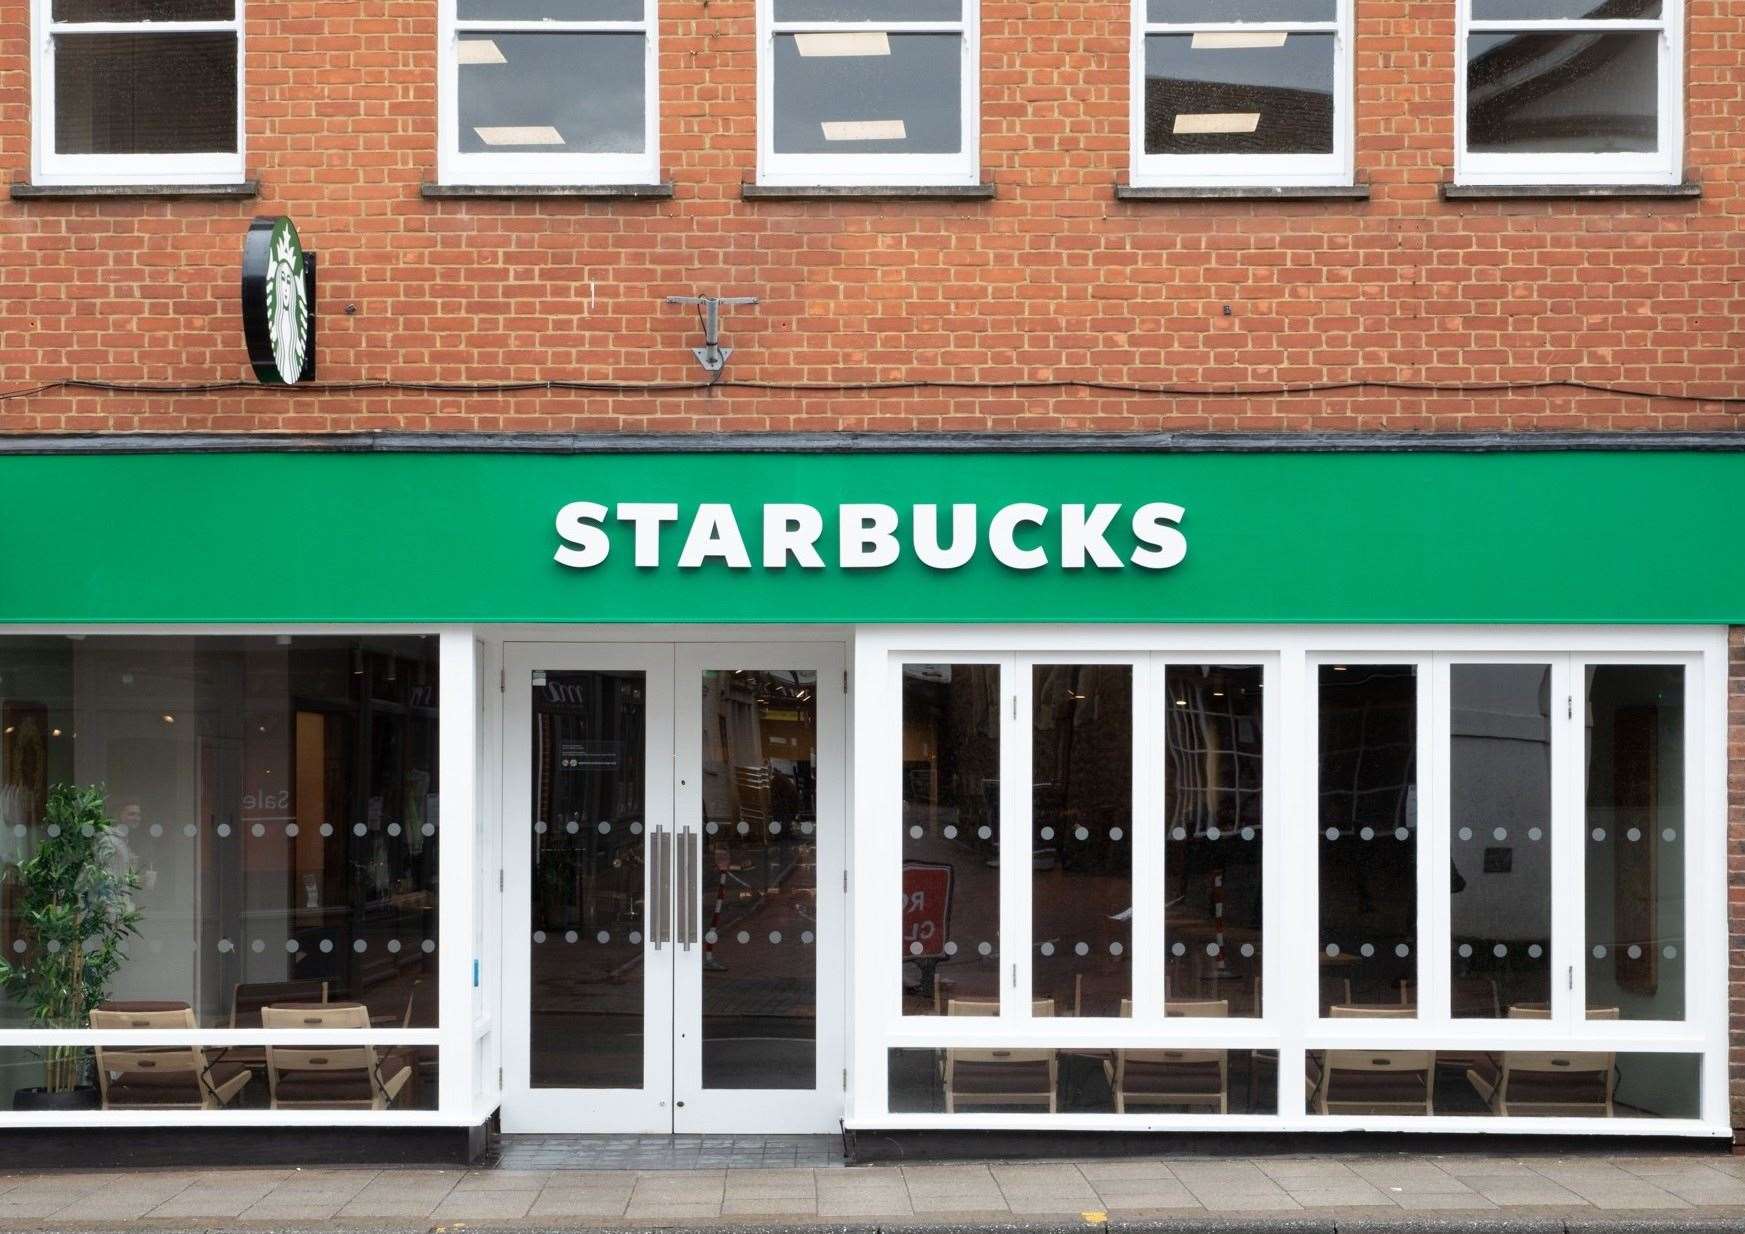 The new Starbucks store in Sevenoaks is now open for business